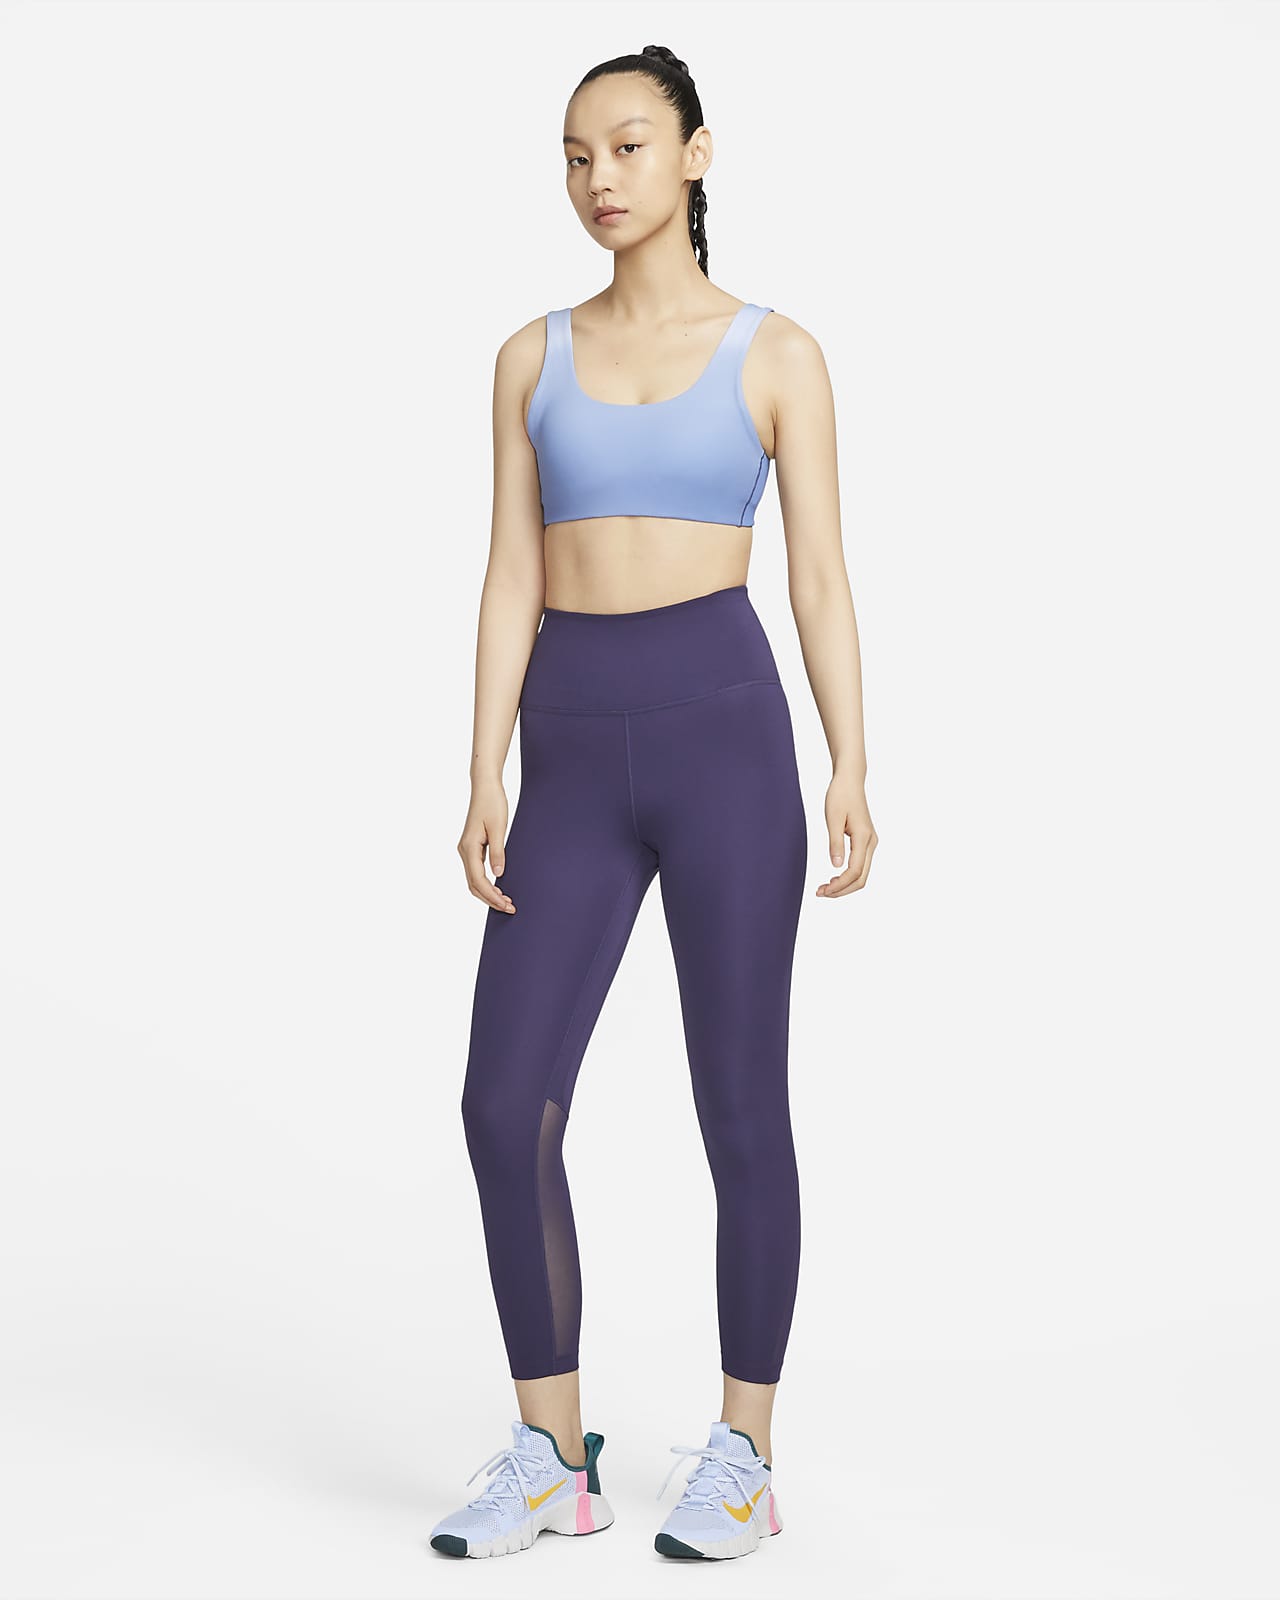 Nike One Women's Mid-Rise 7/8 Leggings, XS at Amazon Women's Clothing store